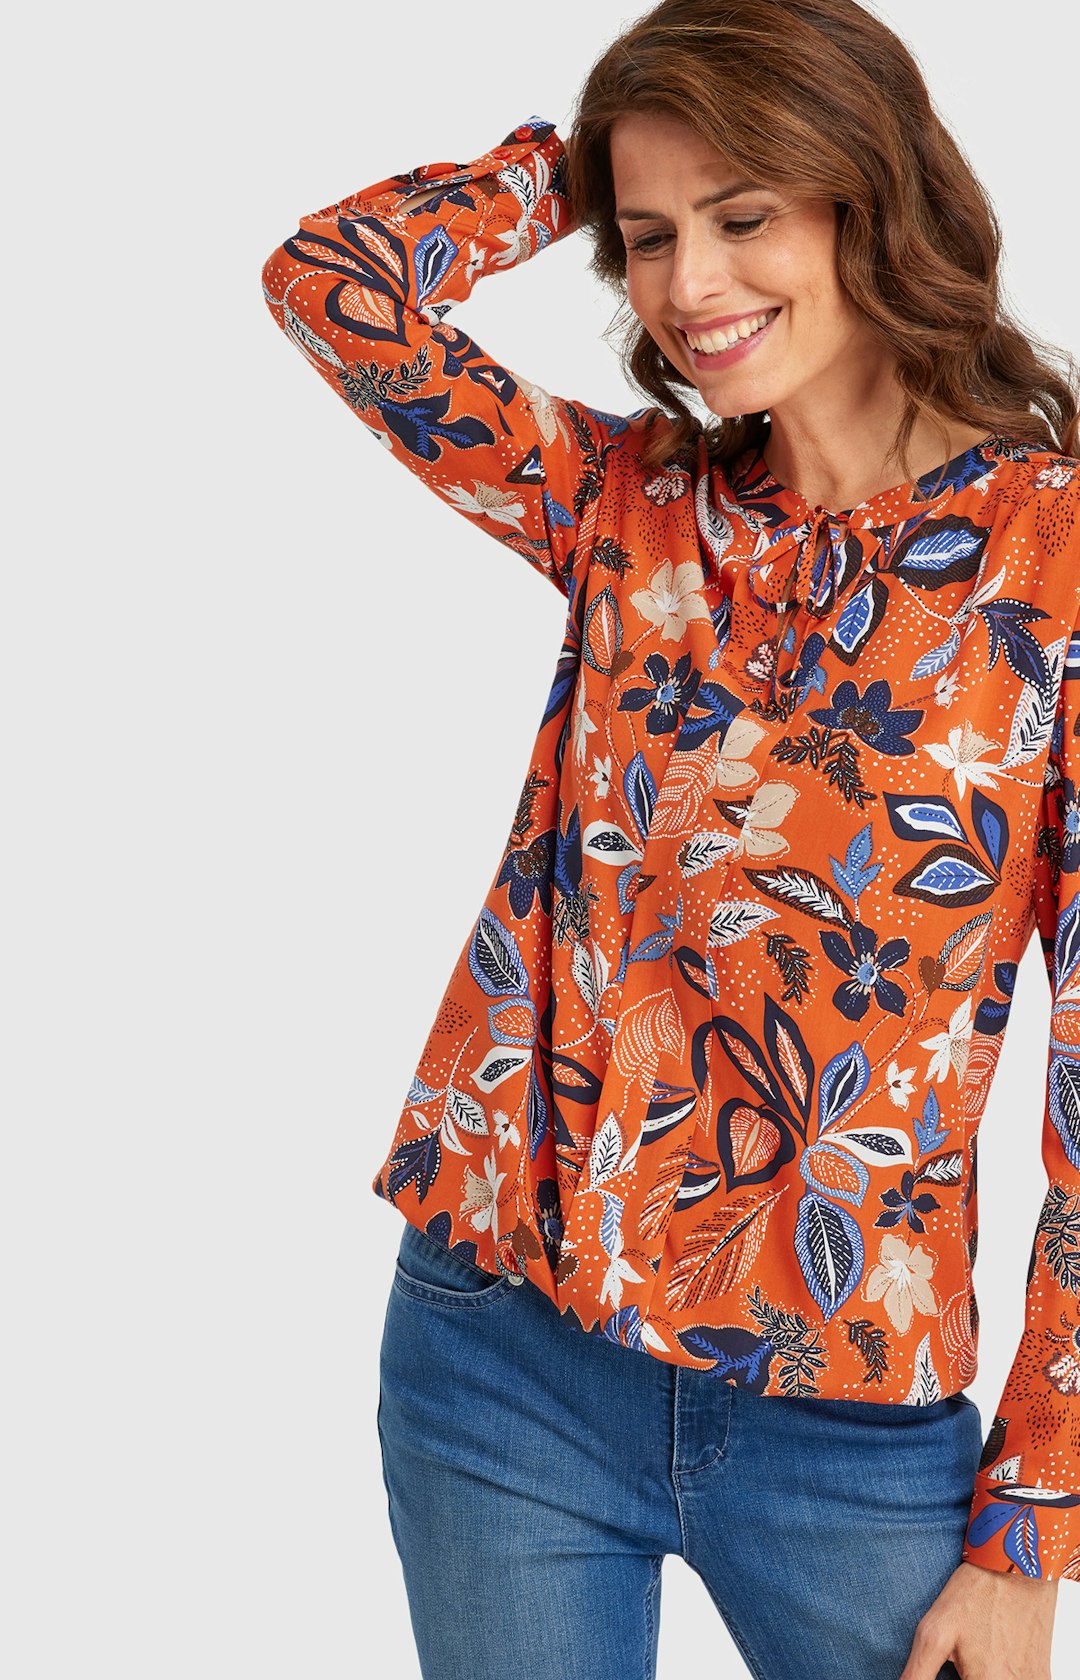 Shirtbluse mit Allover-Muster in Orange